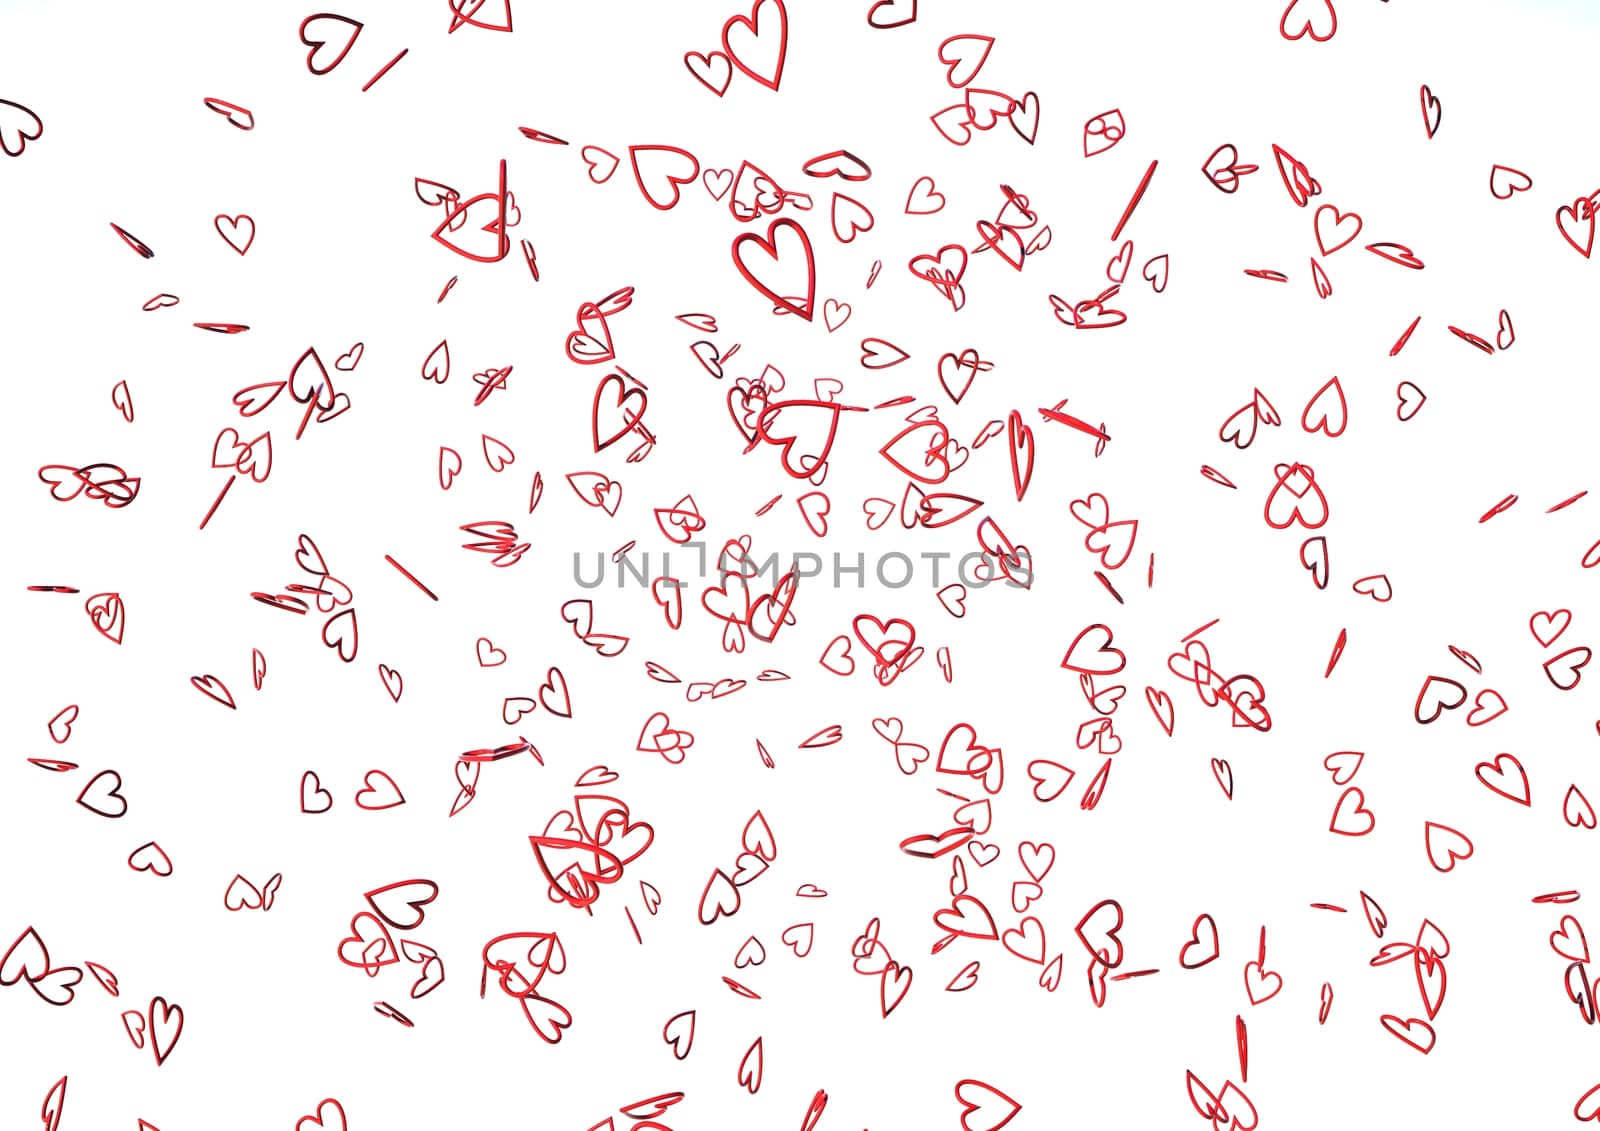 Red hearts Valentine's day background. by richter1910